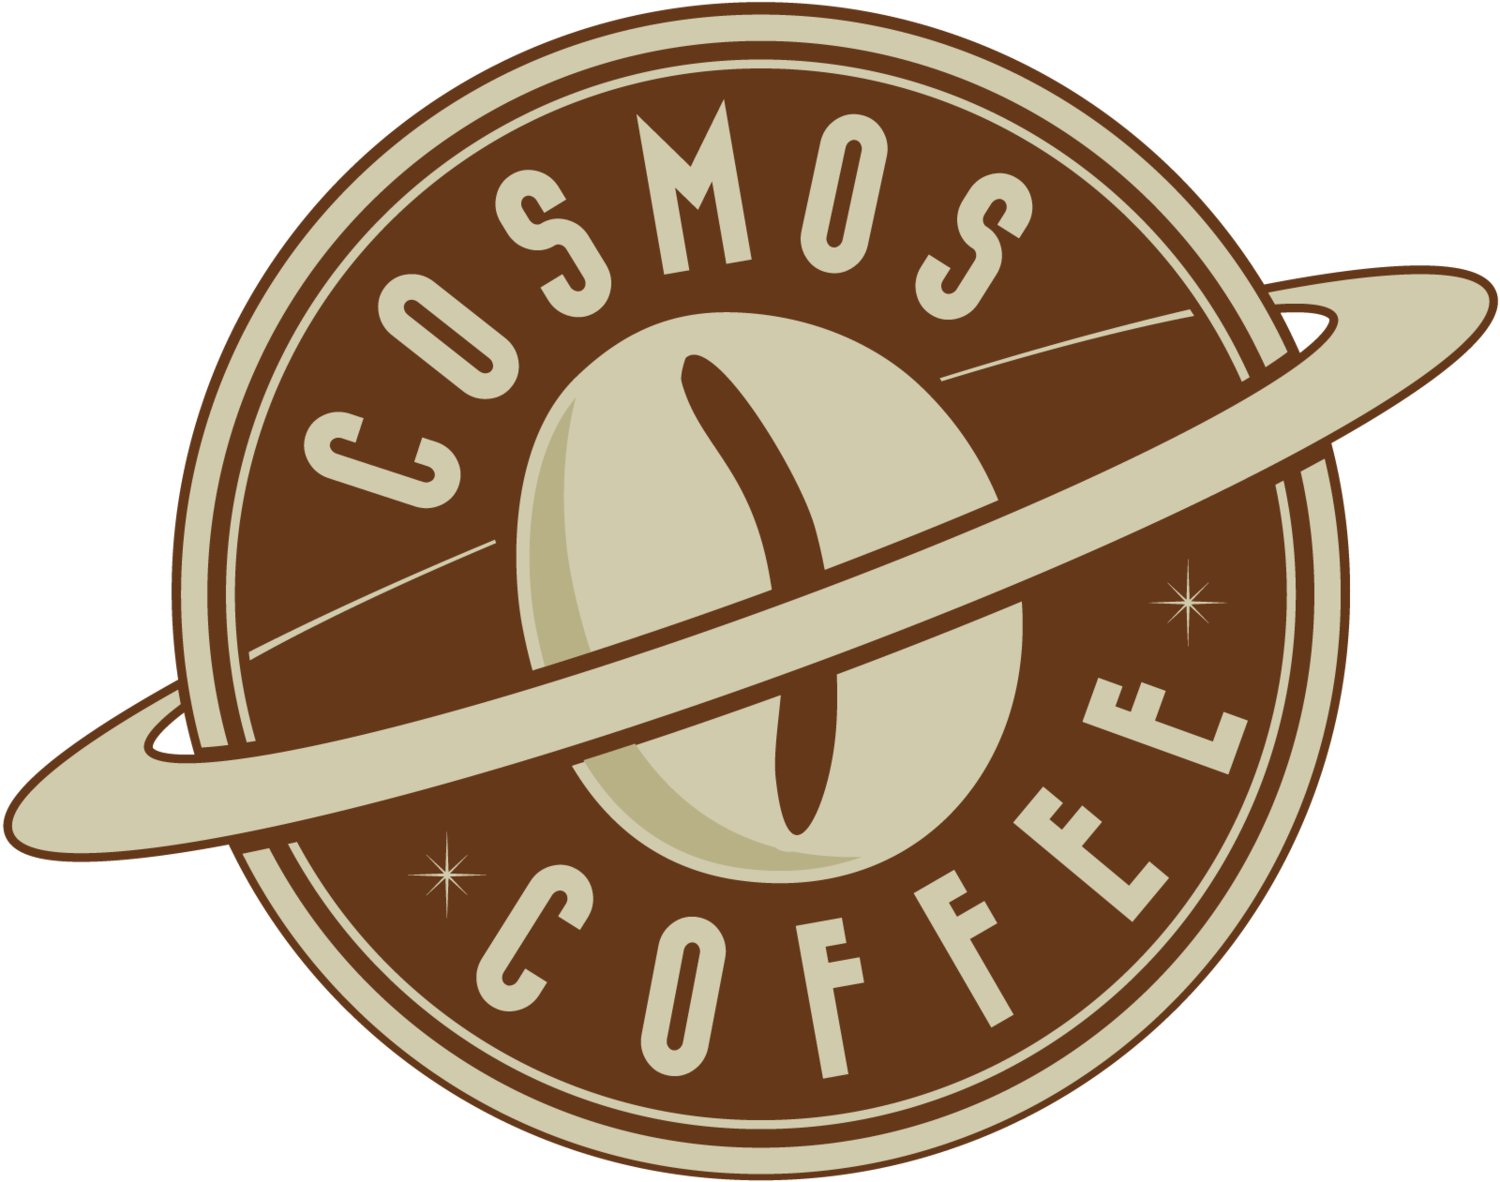 Cosmos Coffee